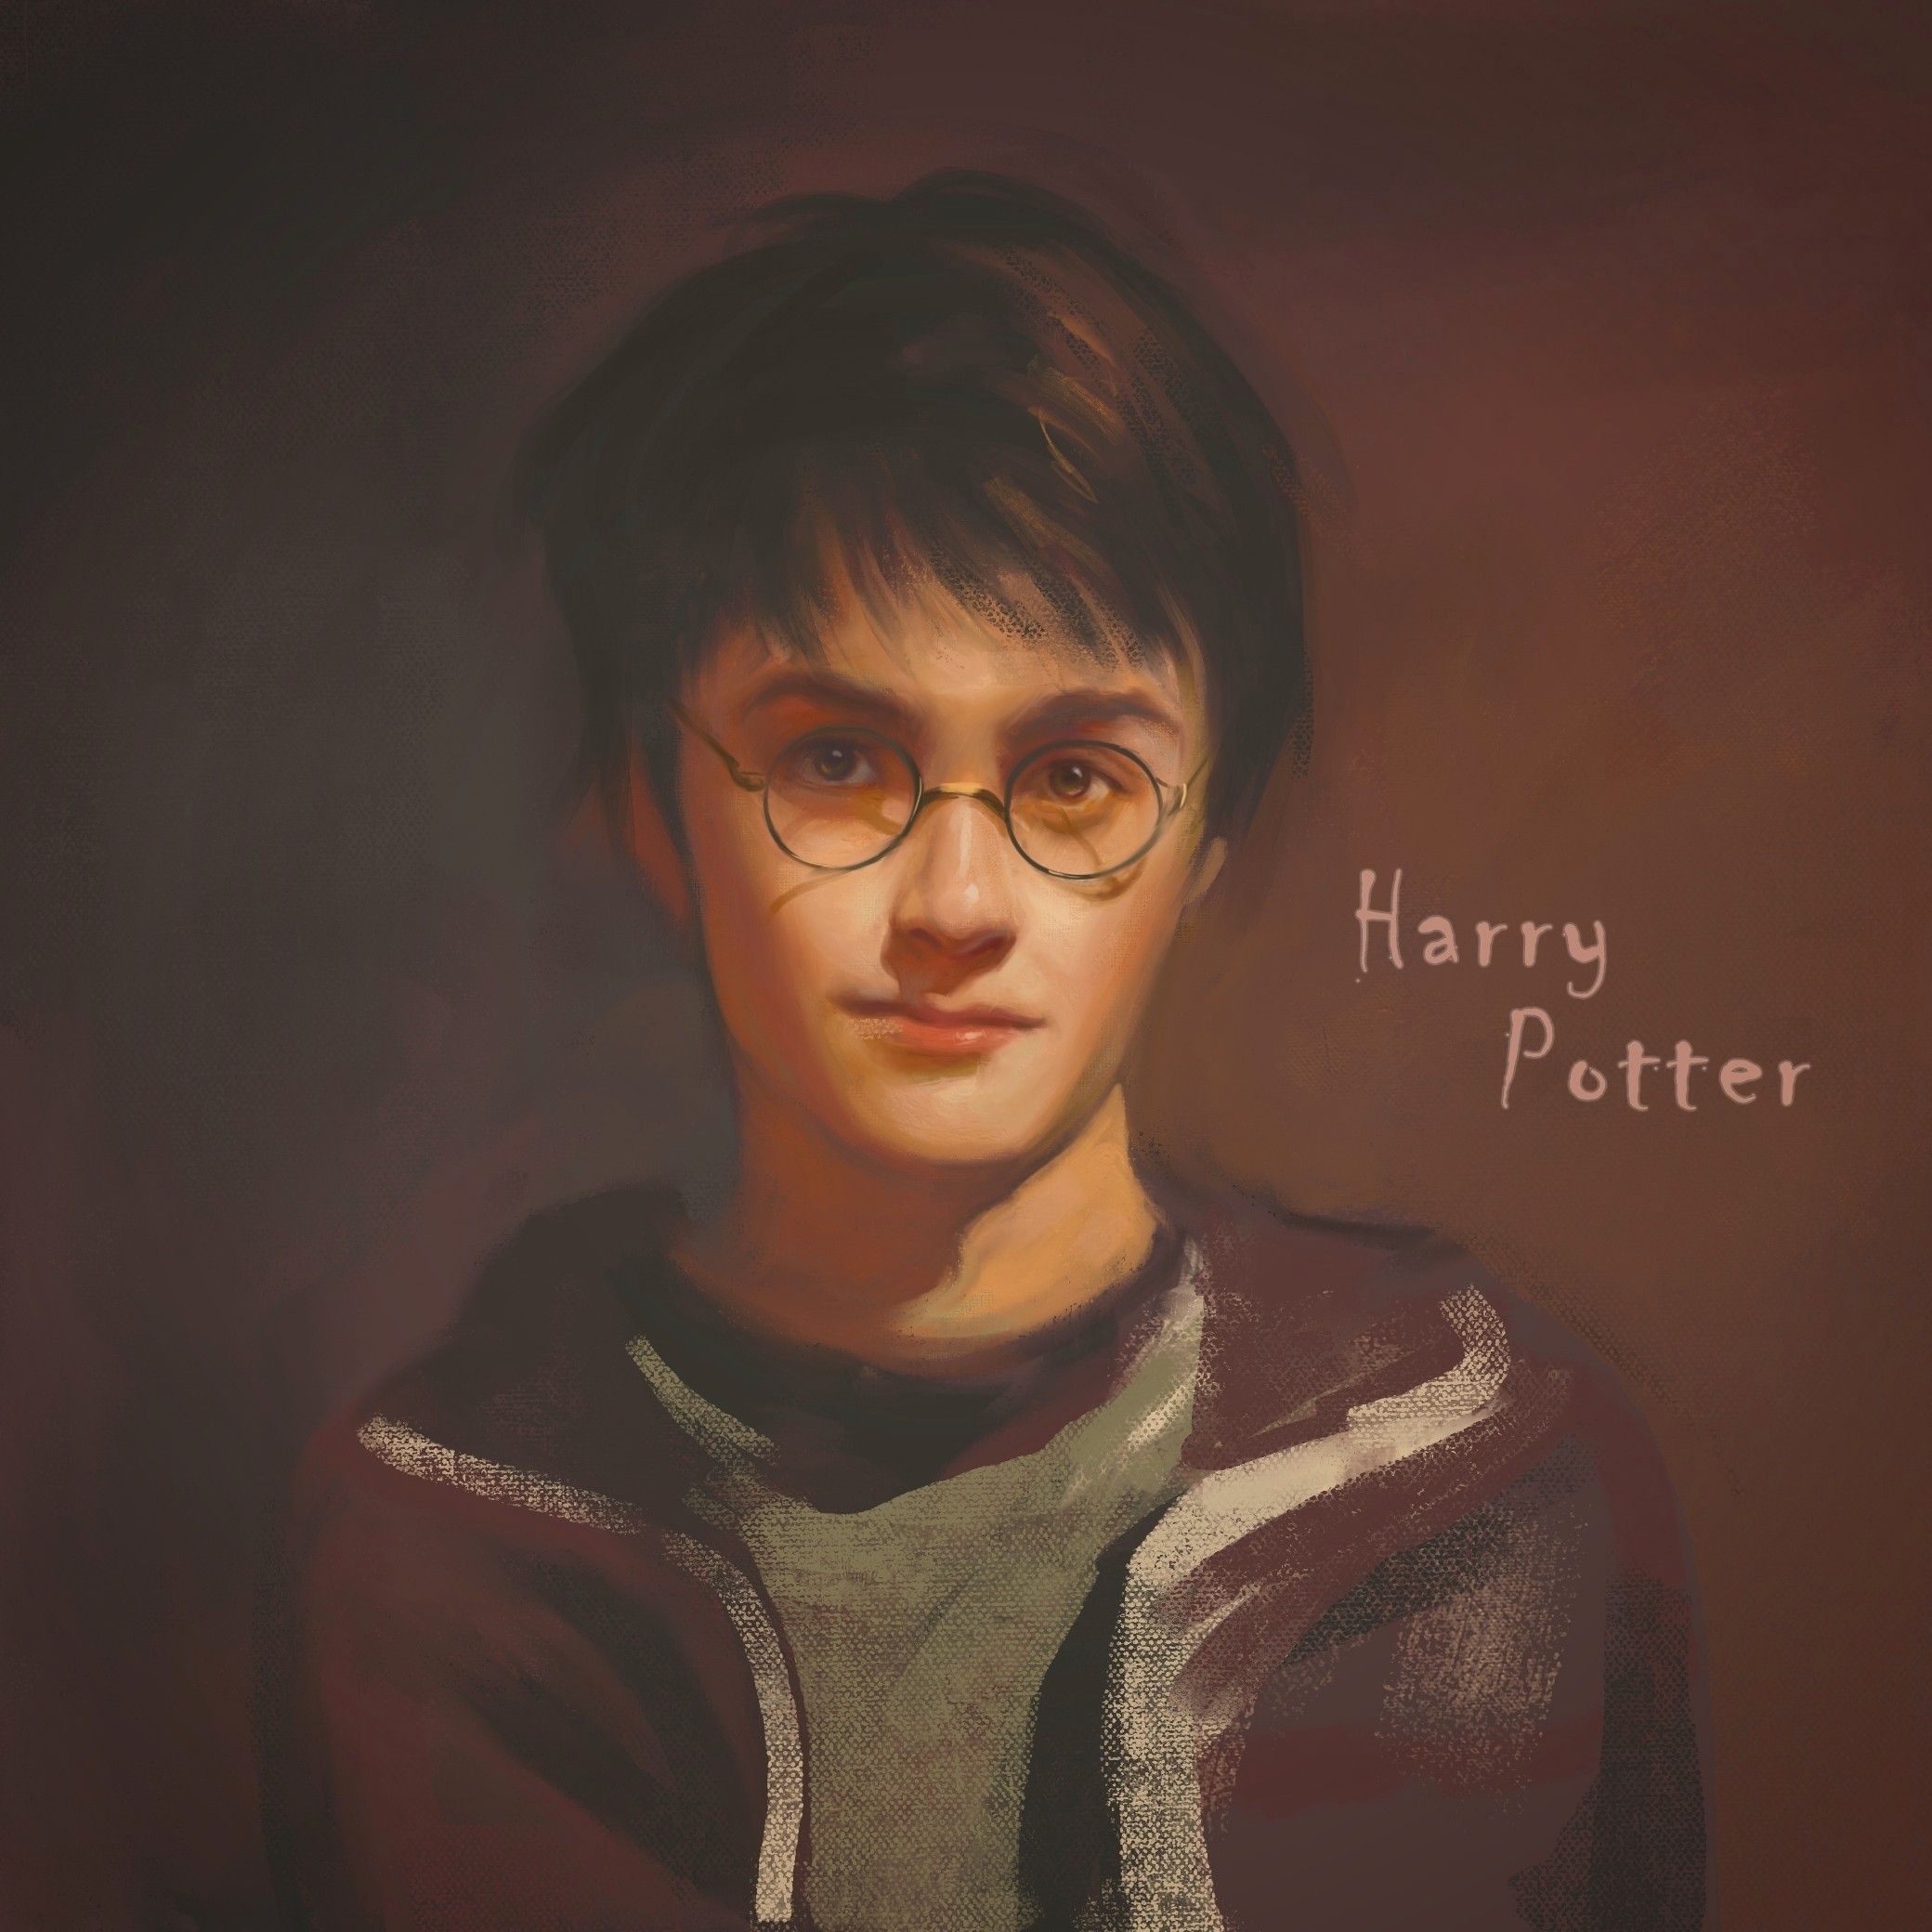 Harry Potter插画图片壁纸